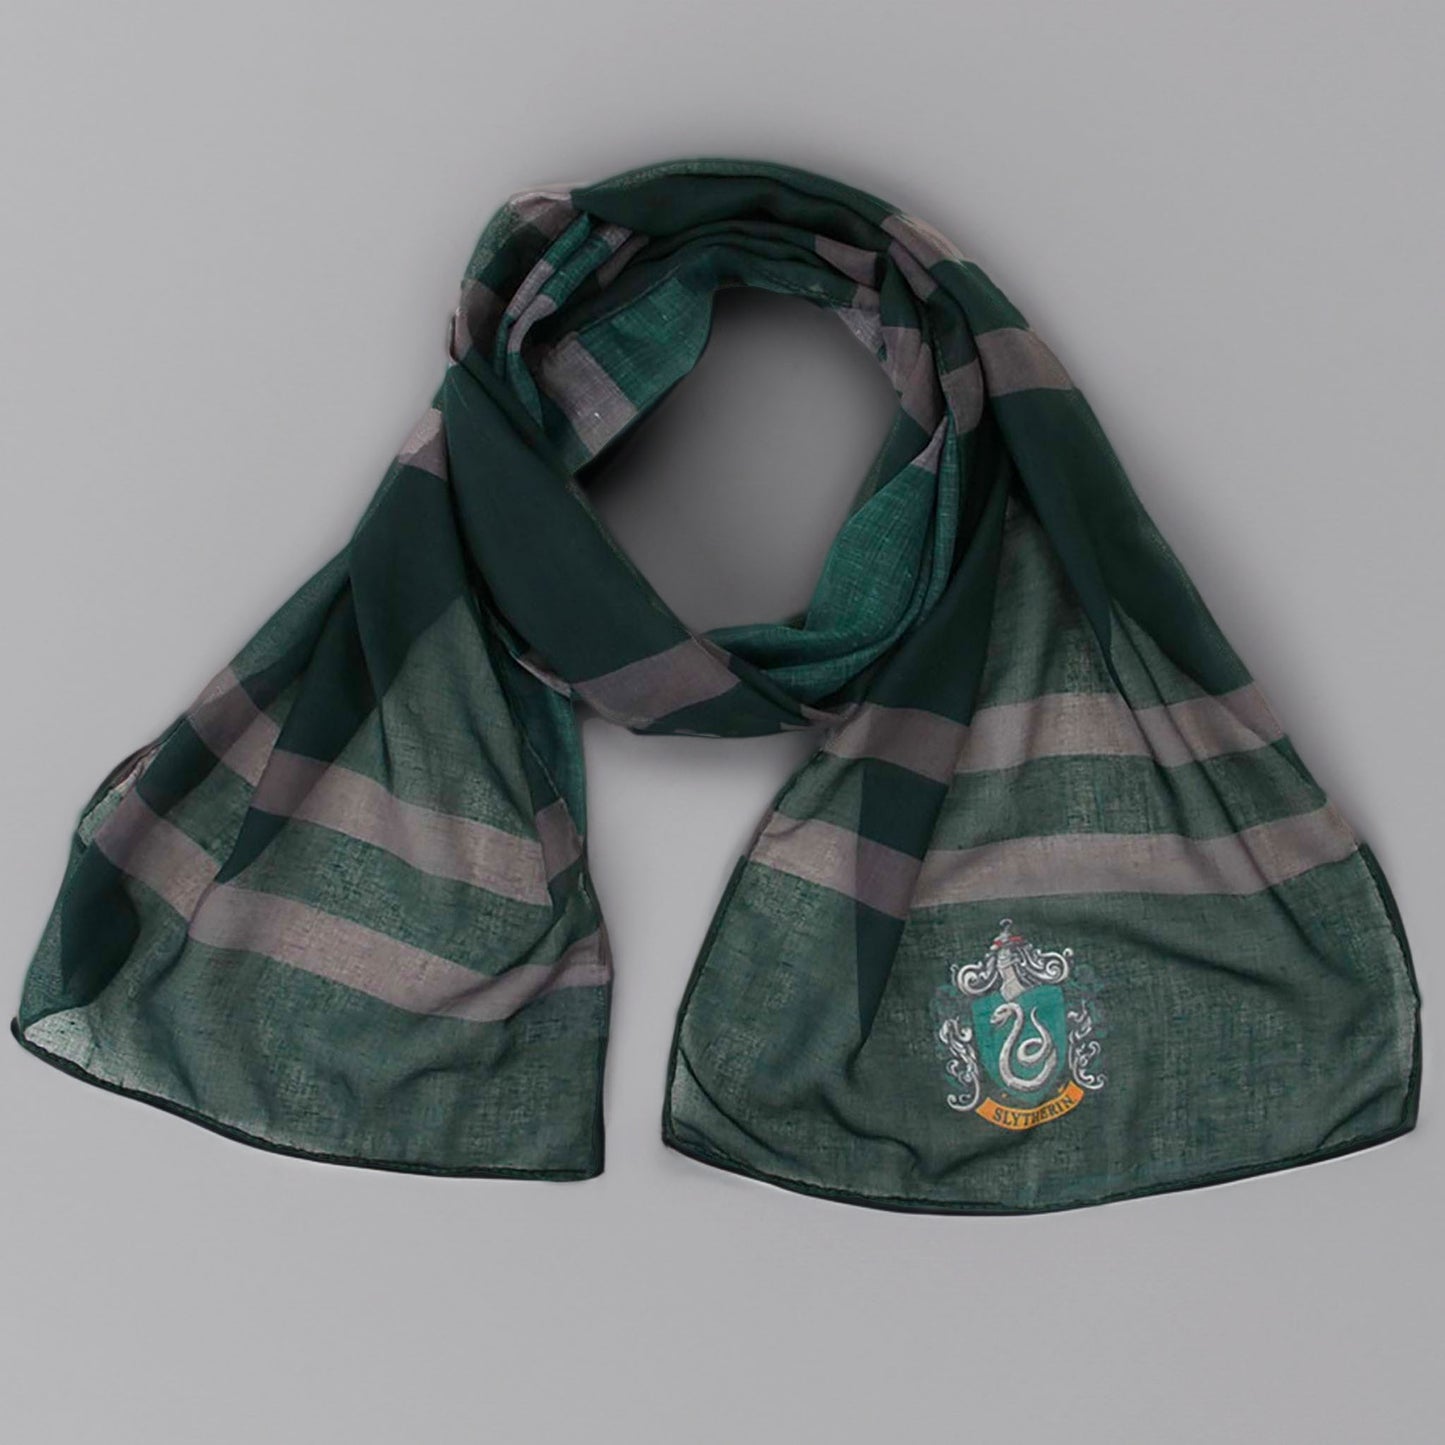 Slytherin Hogwarts House (Harry Potter) Lightweight Fashion Scarf